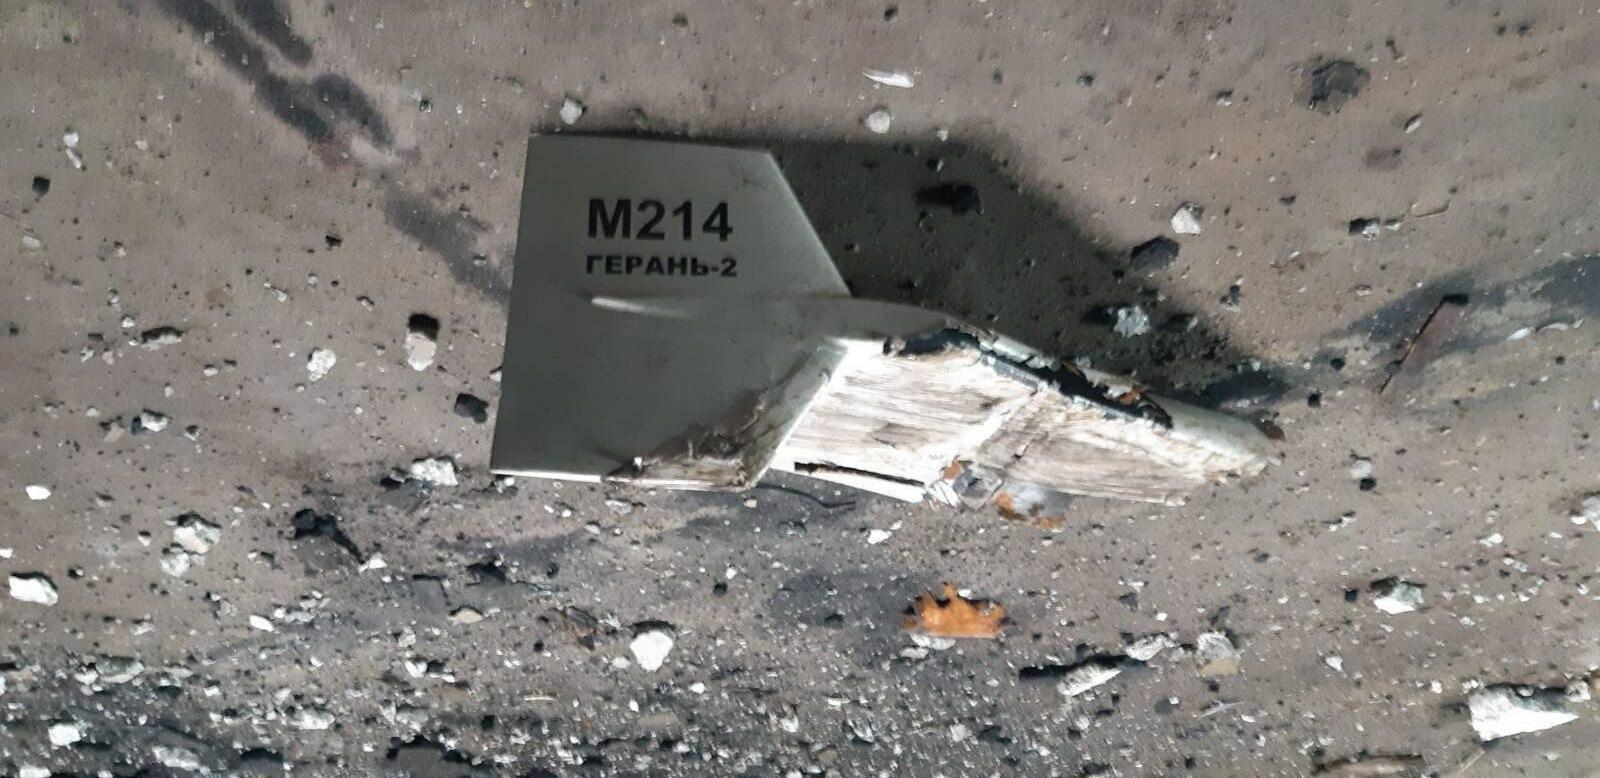 Russia shot down its own UAV -